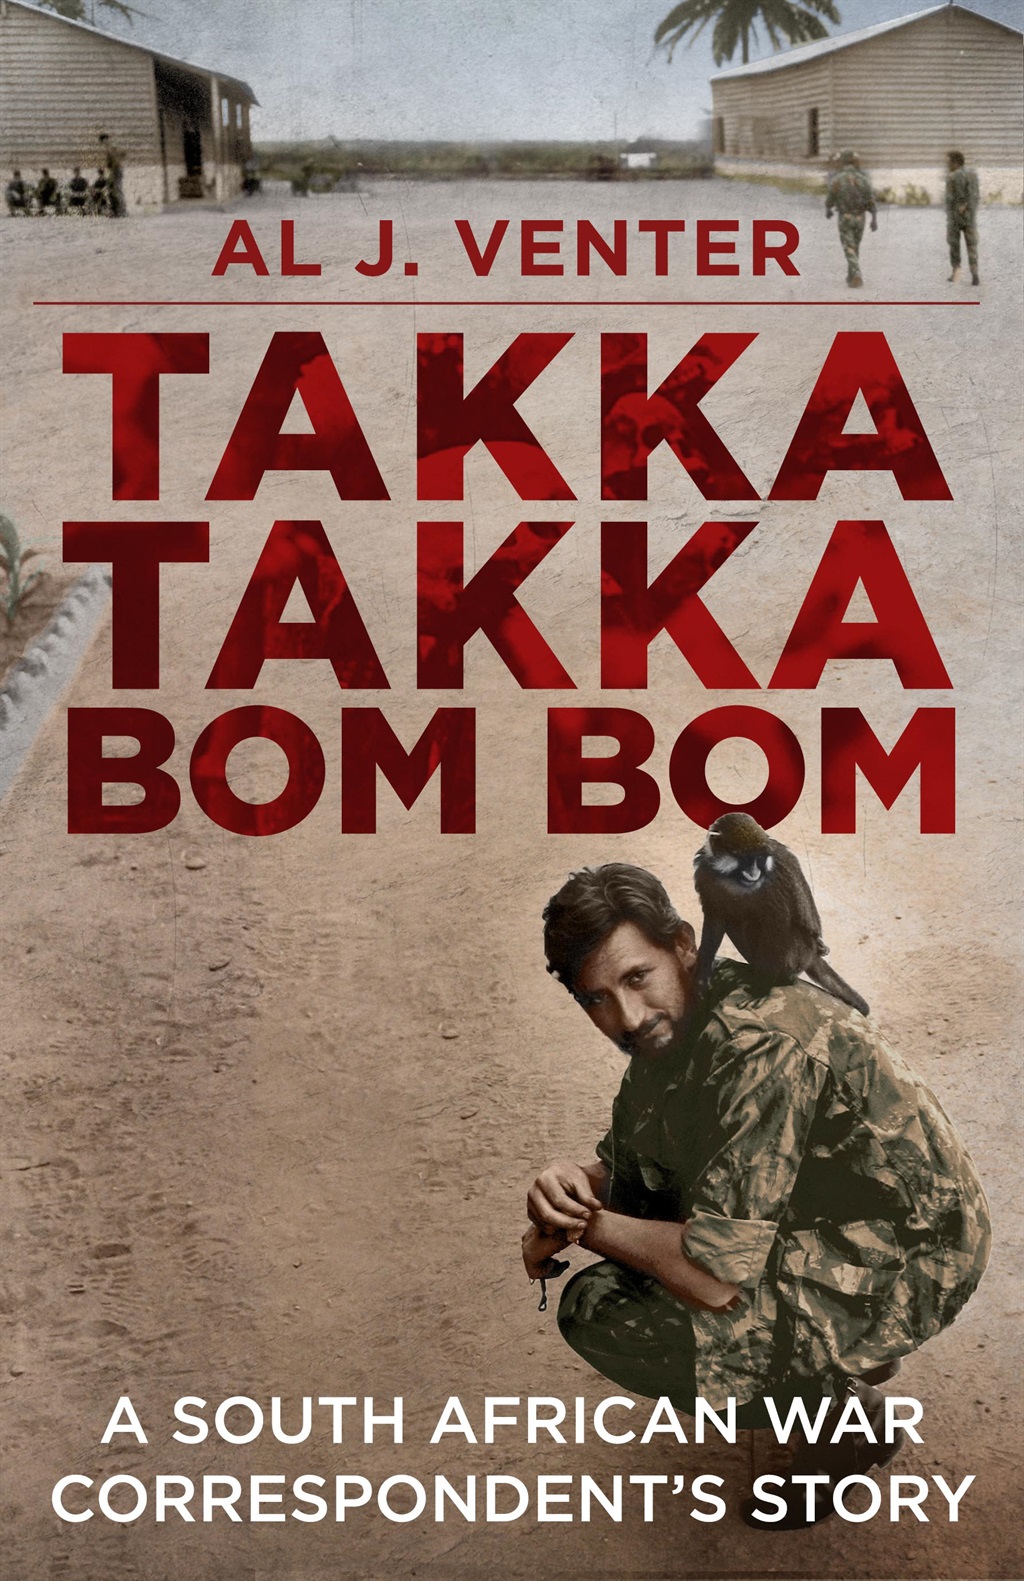 Takka Takka Bom Bom: A South African War Correspondent’s Story by Al J Venter (Tafelberg)